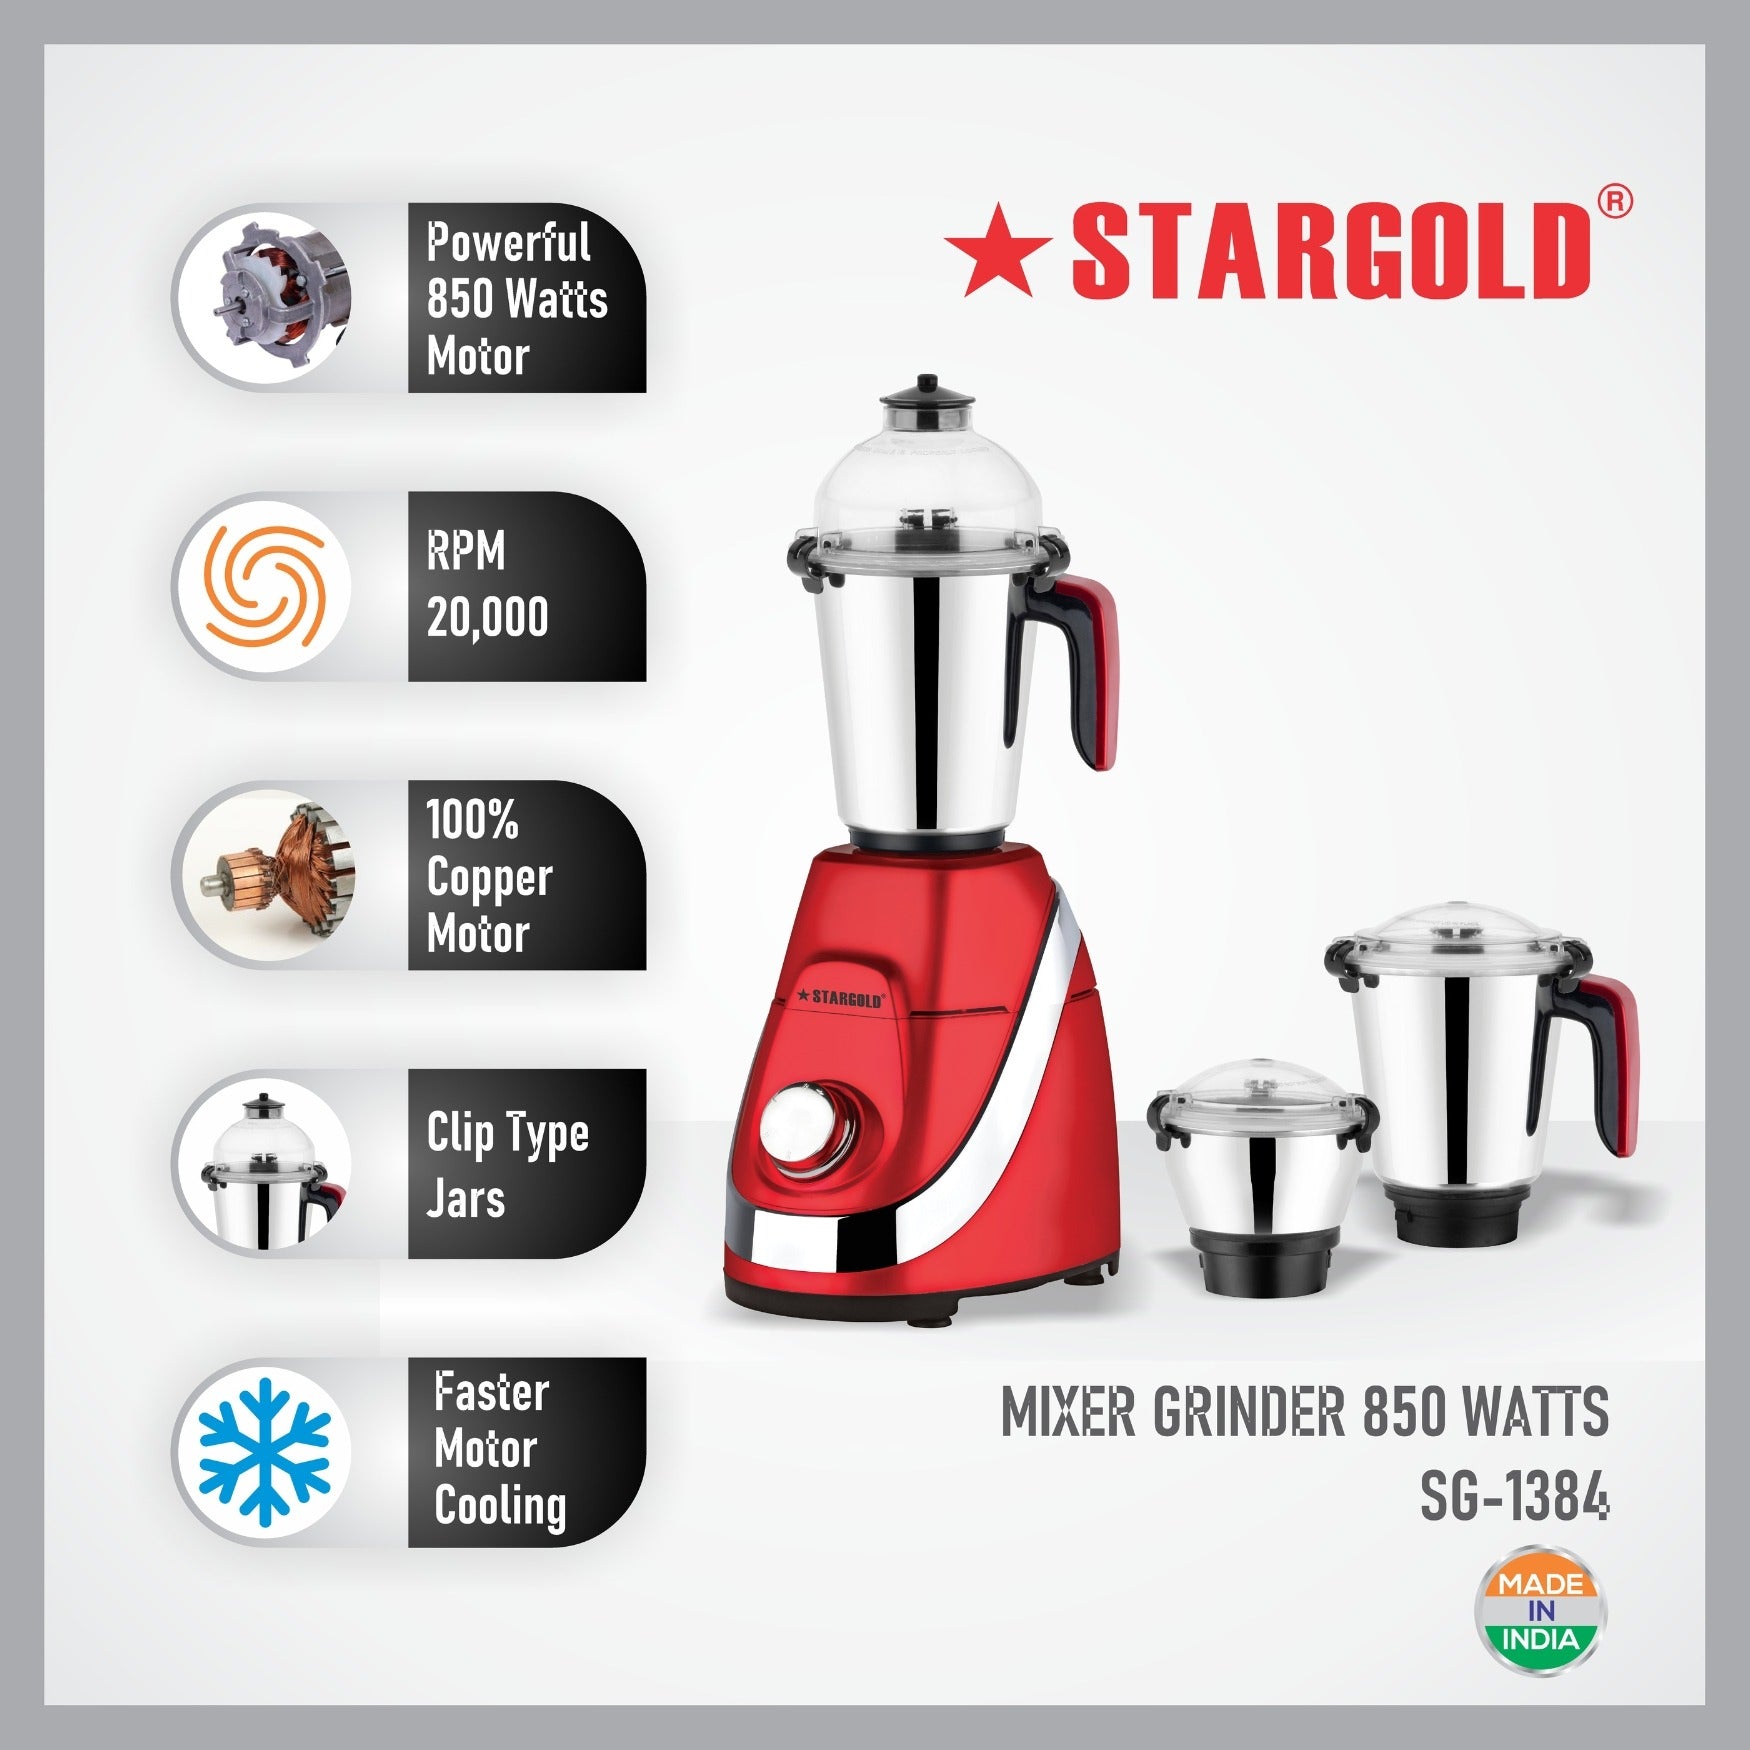 STARGOLD Mixer Grinder 3 In 1 Stainless Steel 3 Jar Body Blender 850W Powerful Motor Juicer Grinder - SG-1384